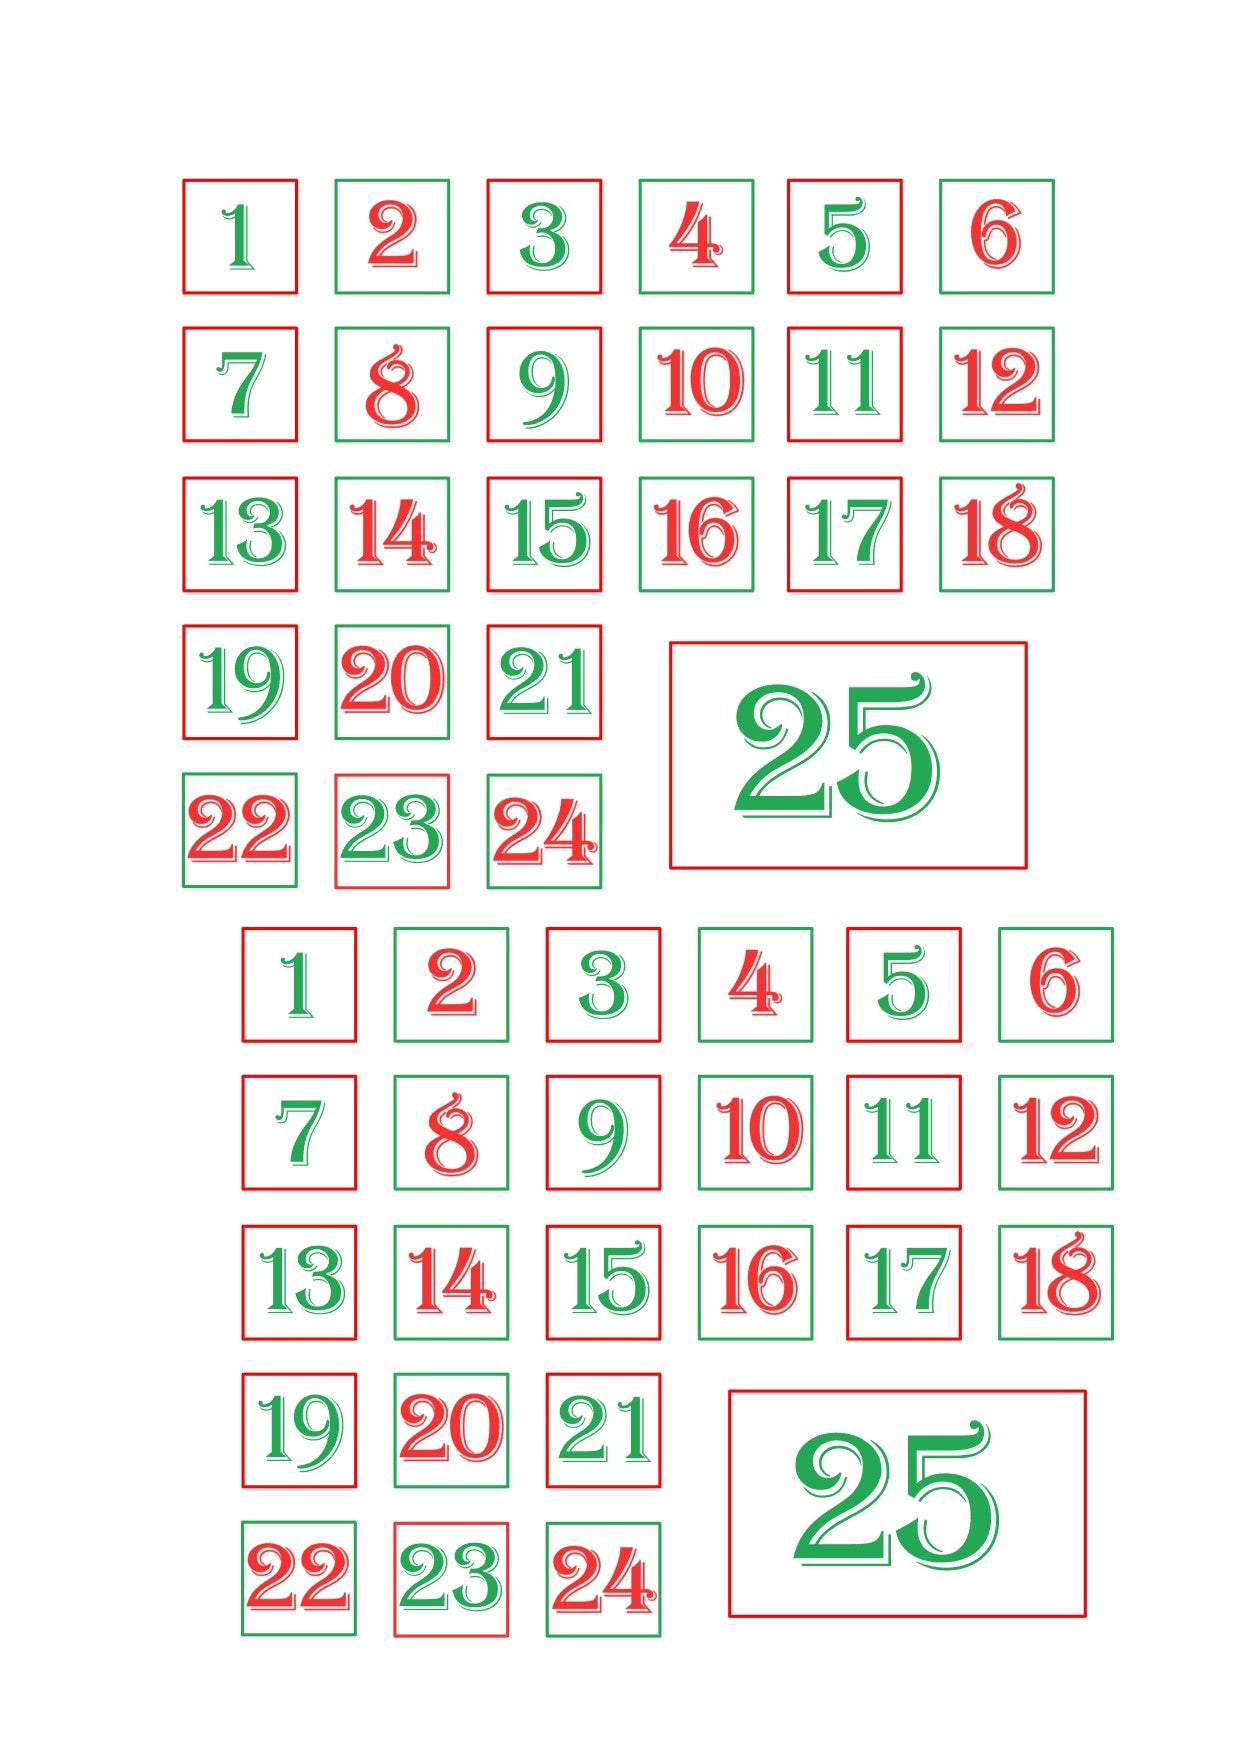 2x Advent Calendar Number Stickers